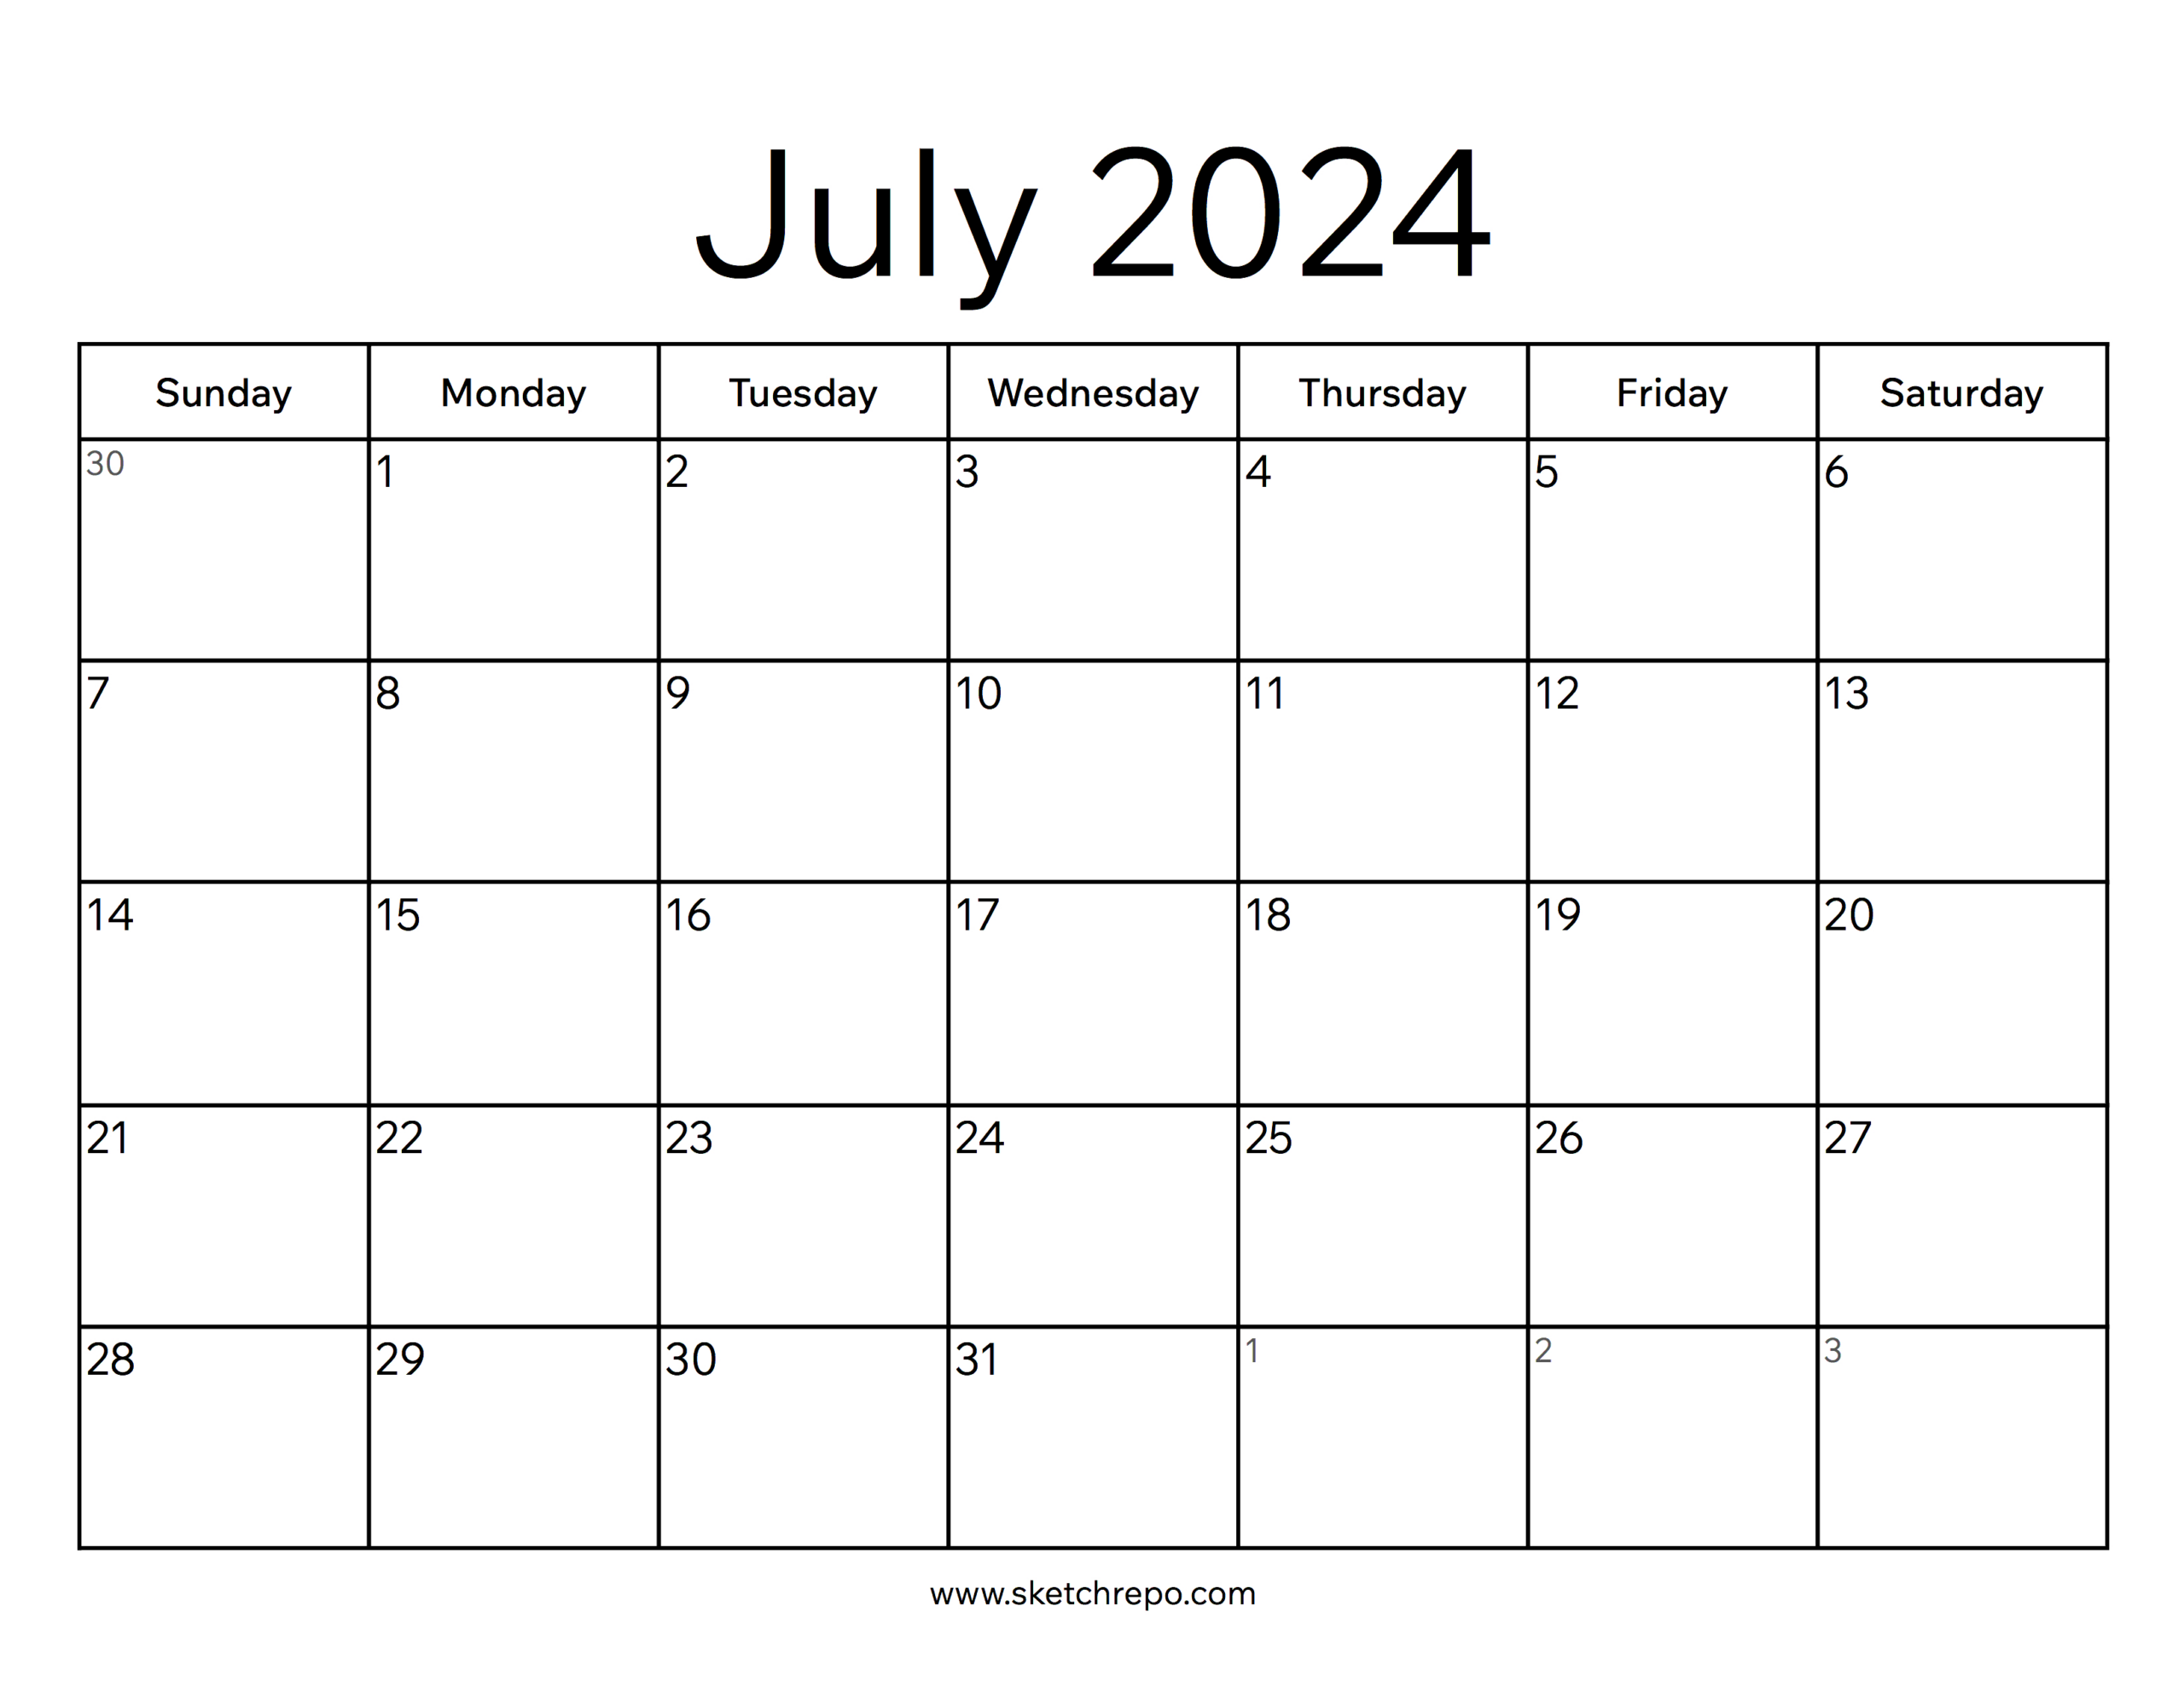 July 2024 Calendar – Sketch Repo | A Calendar Of July 2024